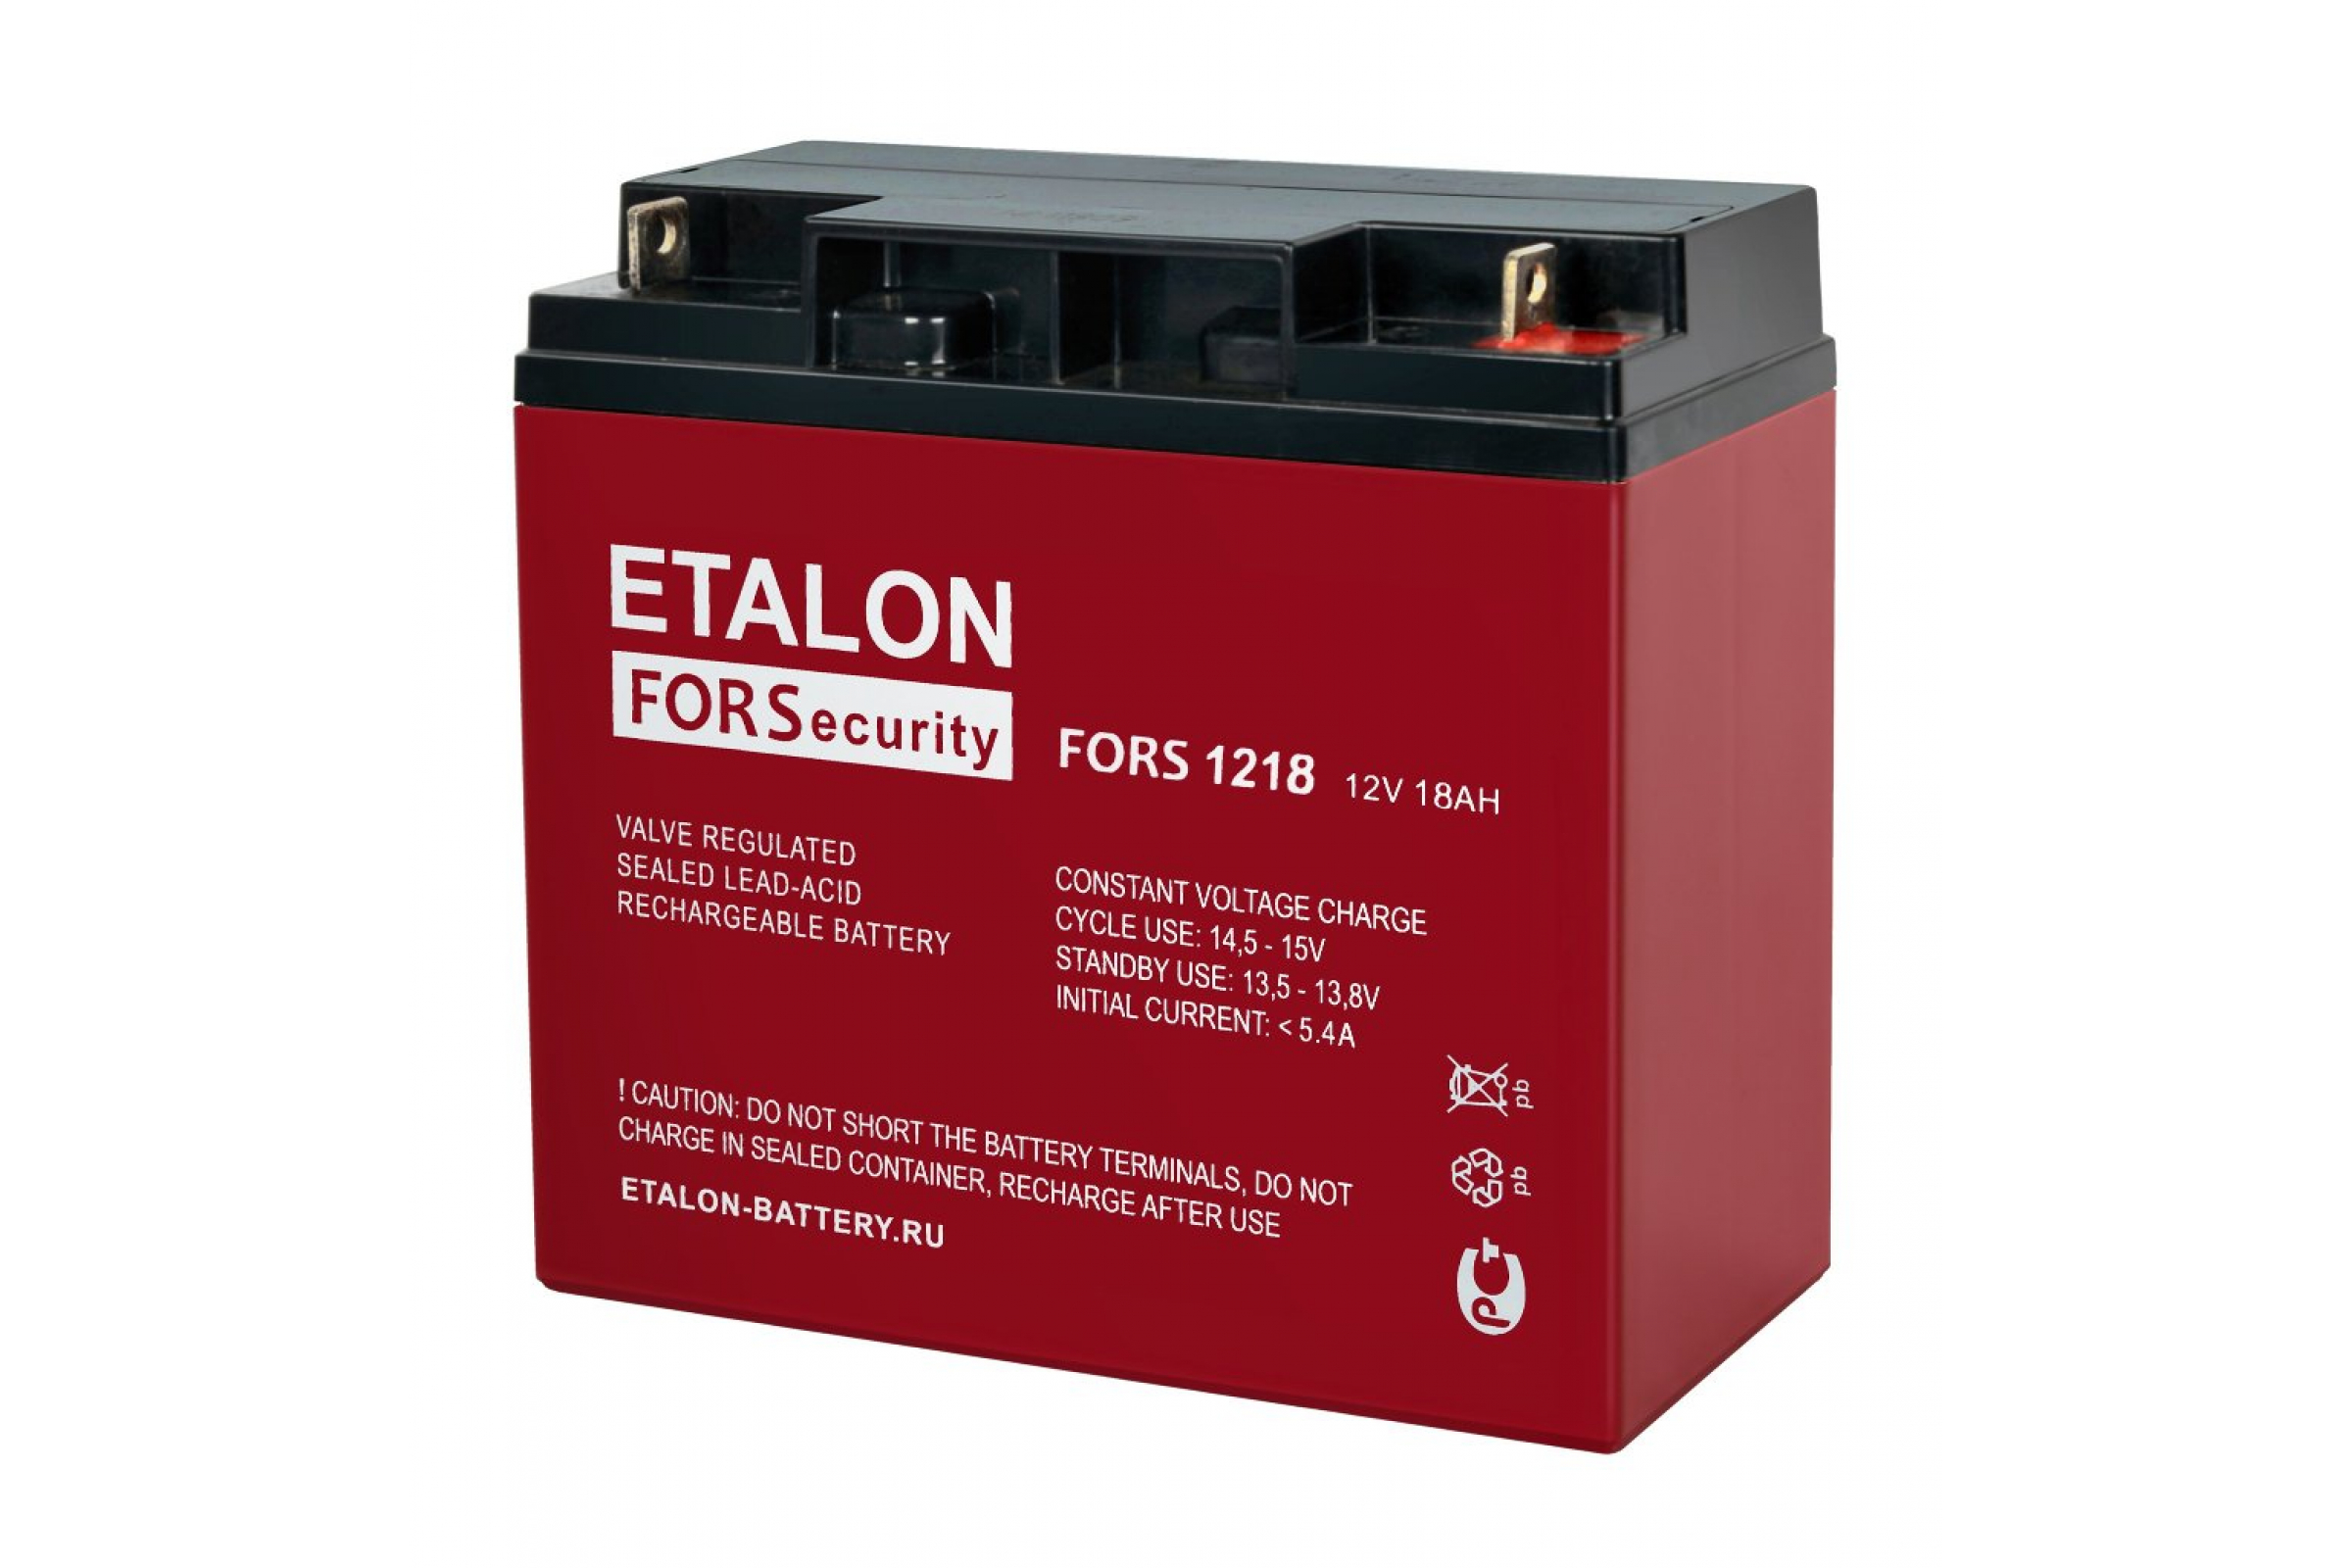 Емкость свинцовых аккумуляторов. Аккумуляторная батарея Etalon FS 1218. АКБ Etalon fors 1218. SF 1218 аккумулятор 18ач 12в. Аккумуляторы Etalon Battery.